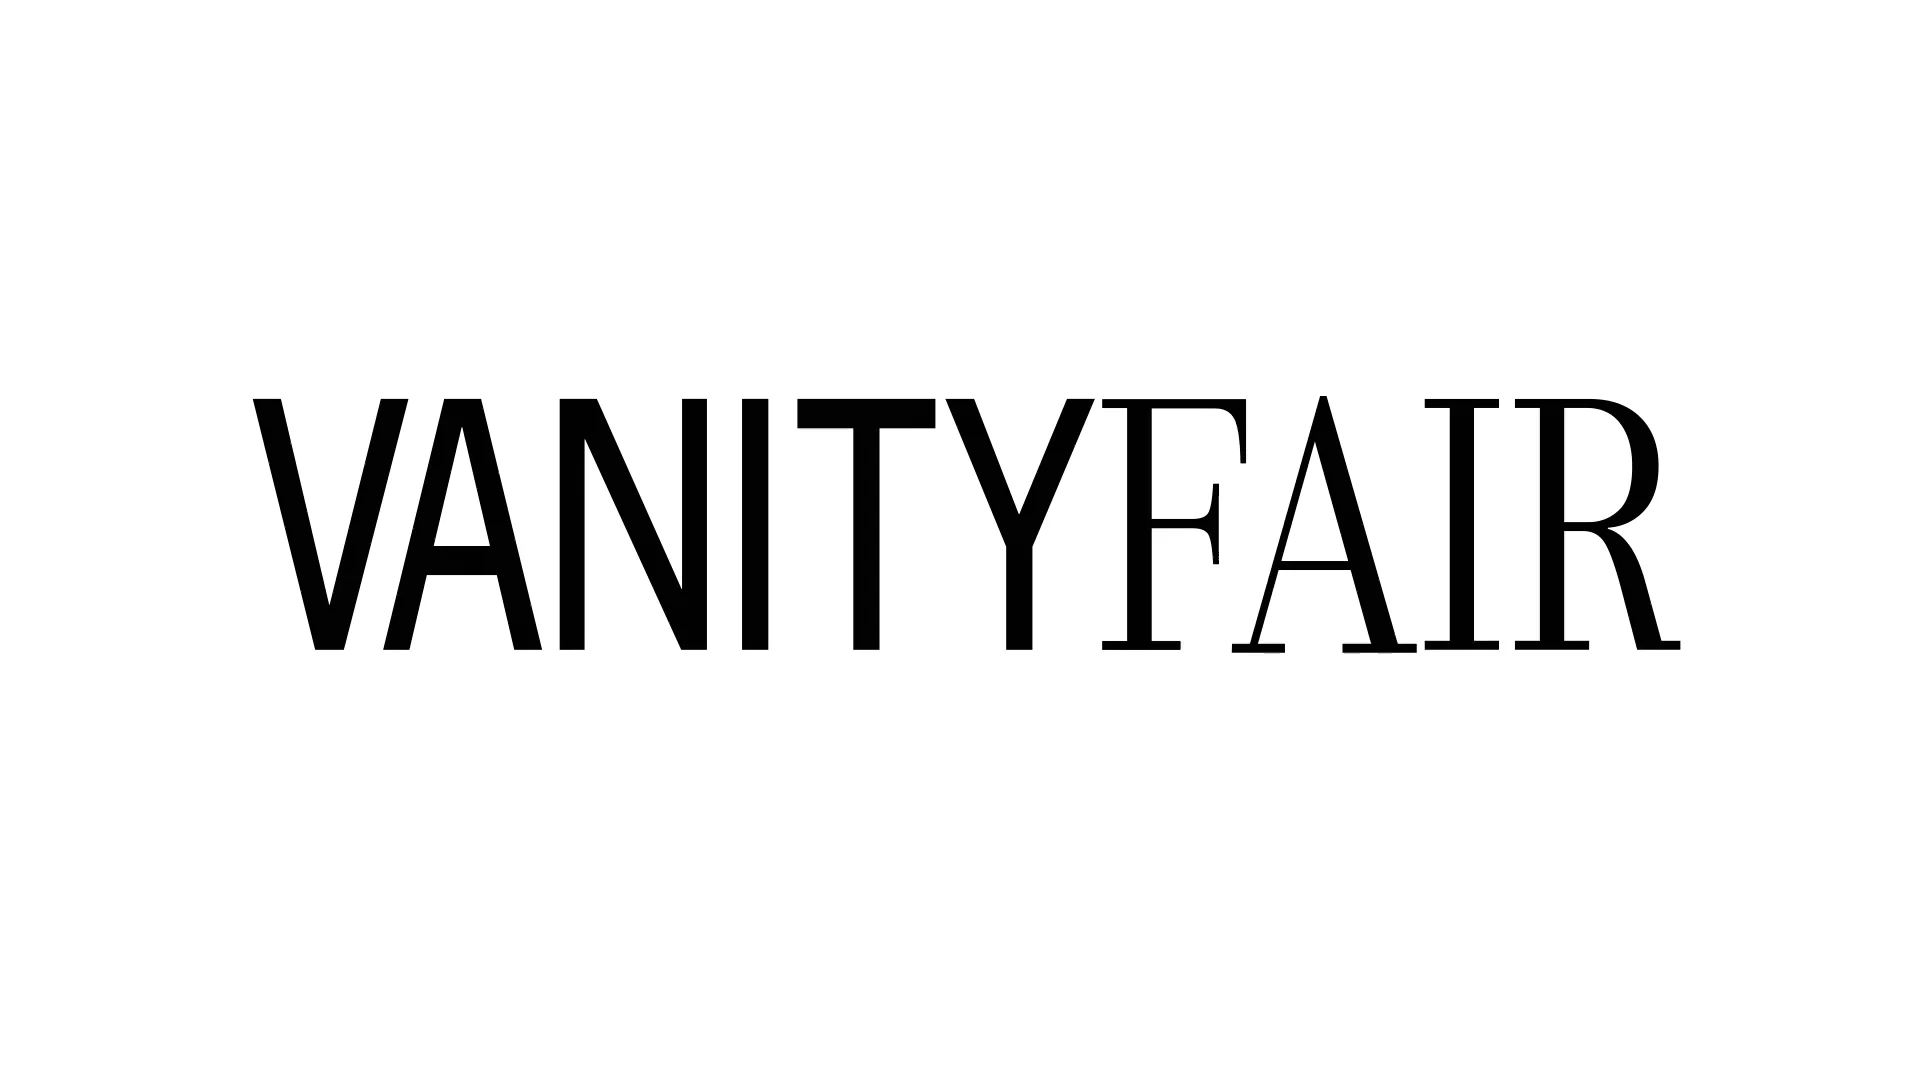 Vanity Fair logo motion on Vimeo